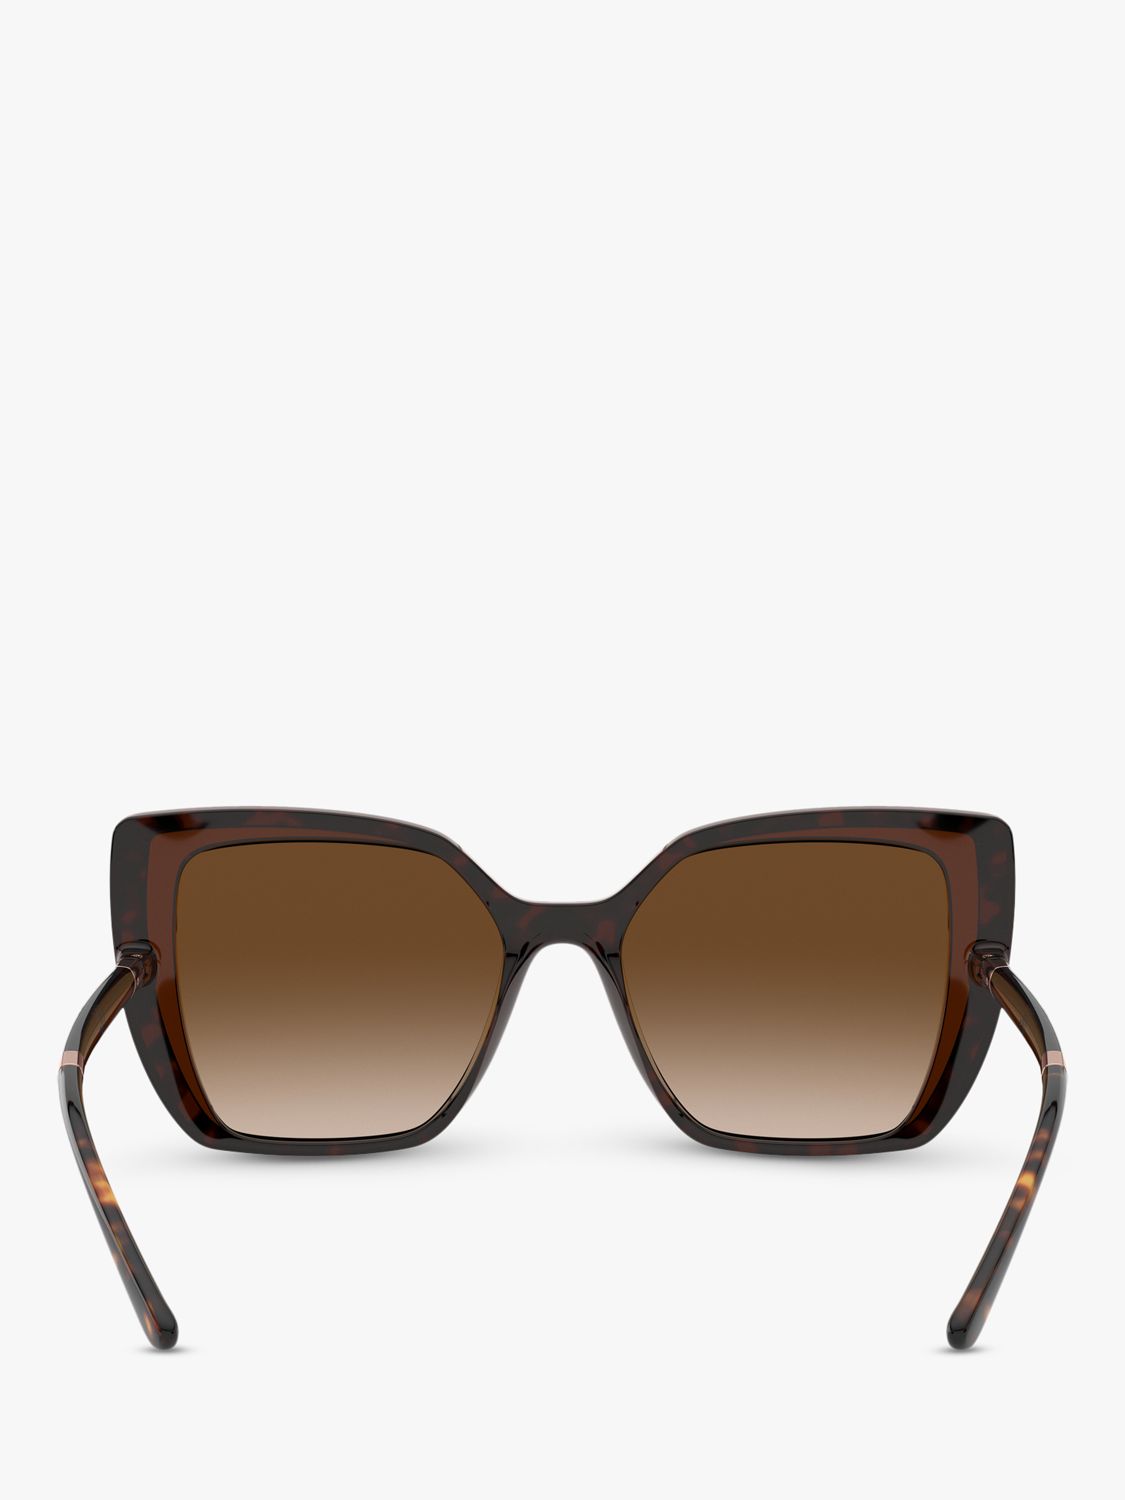 Dolce & Gabbana DG6138 Women's Butterfly Sunglasses, Brown/Brown Gradient